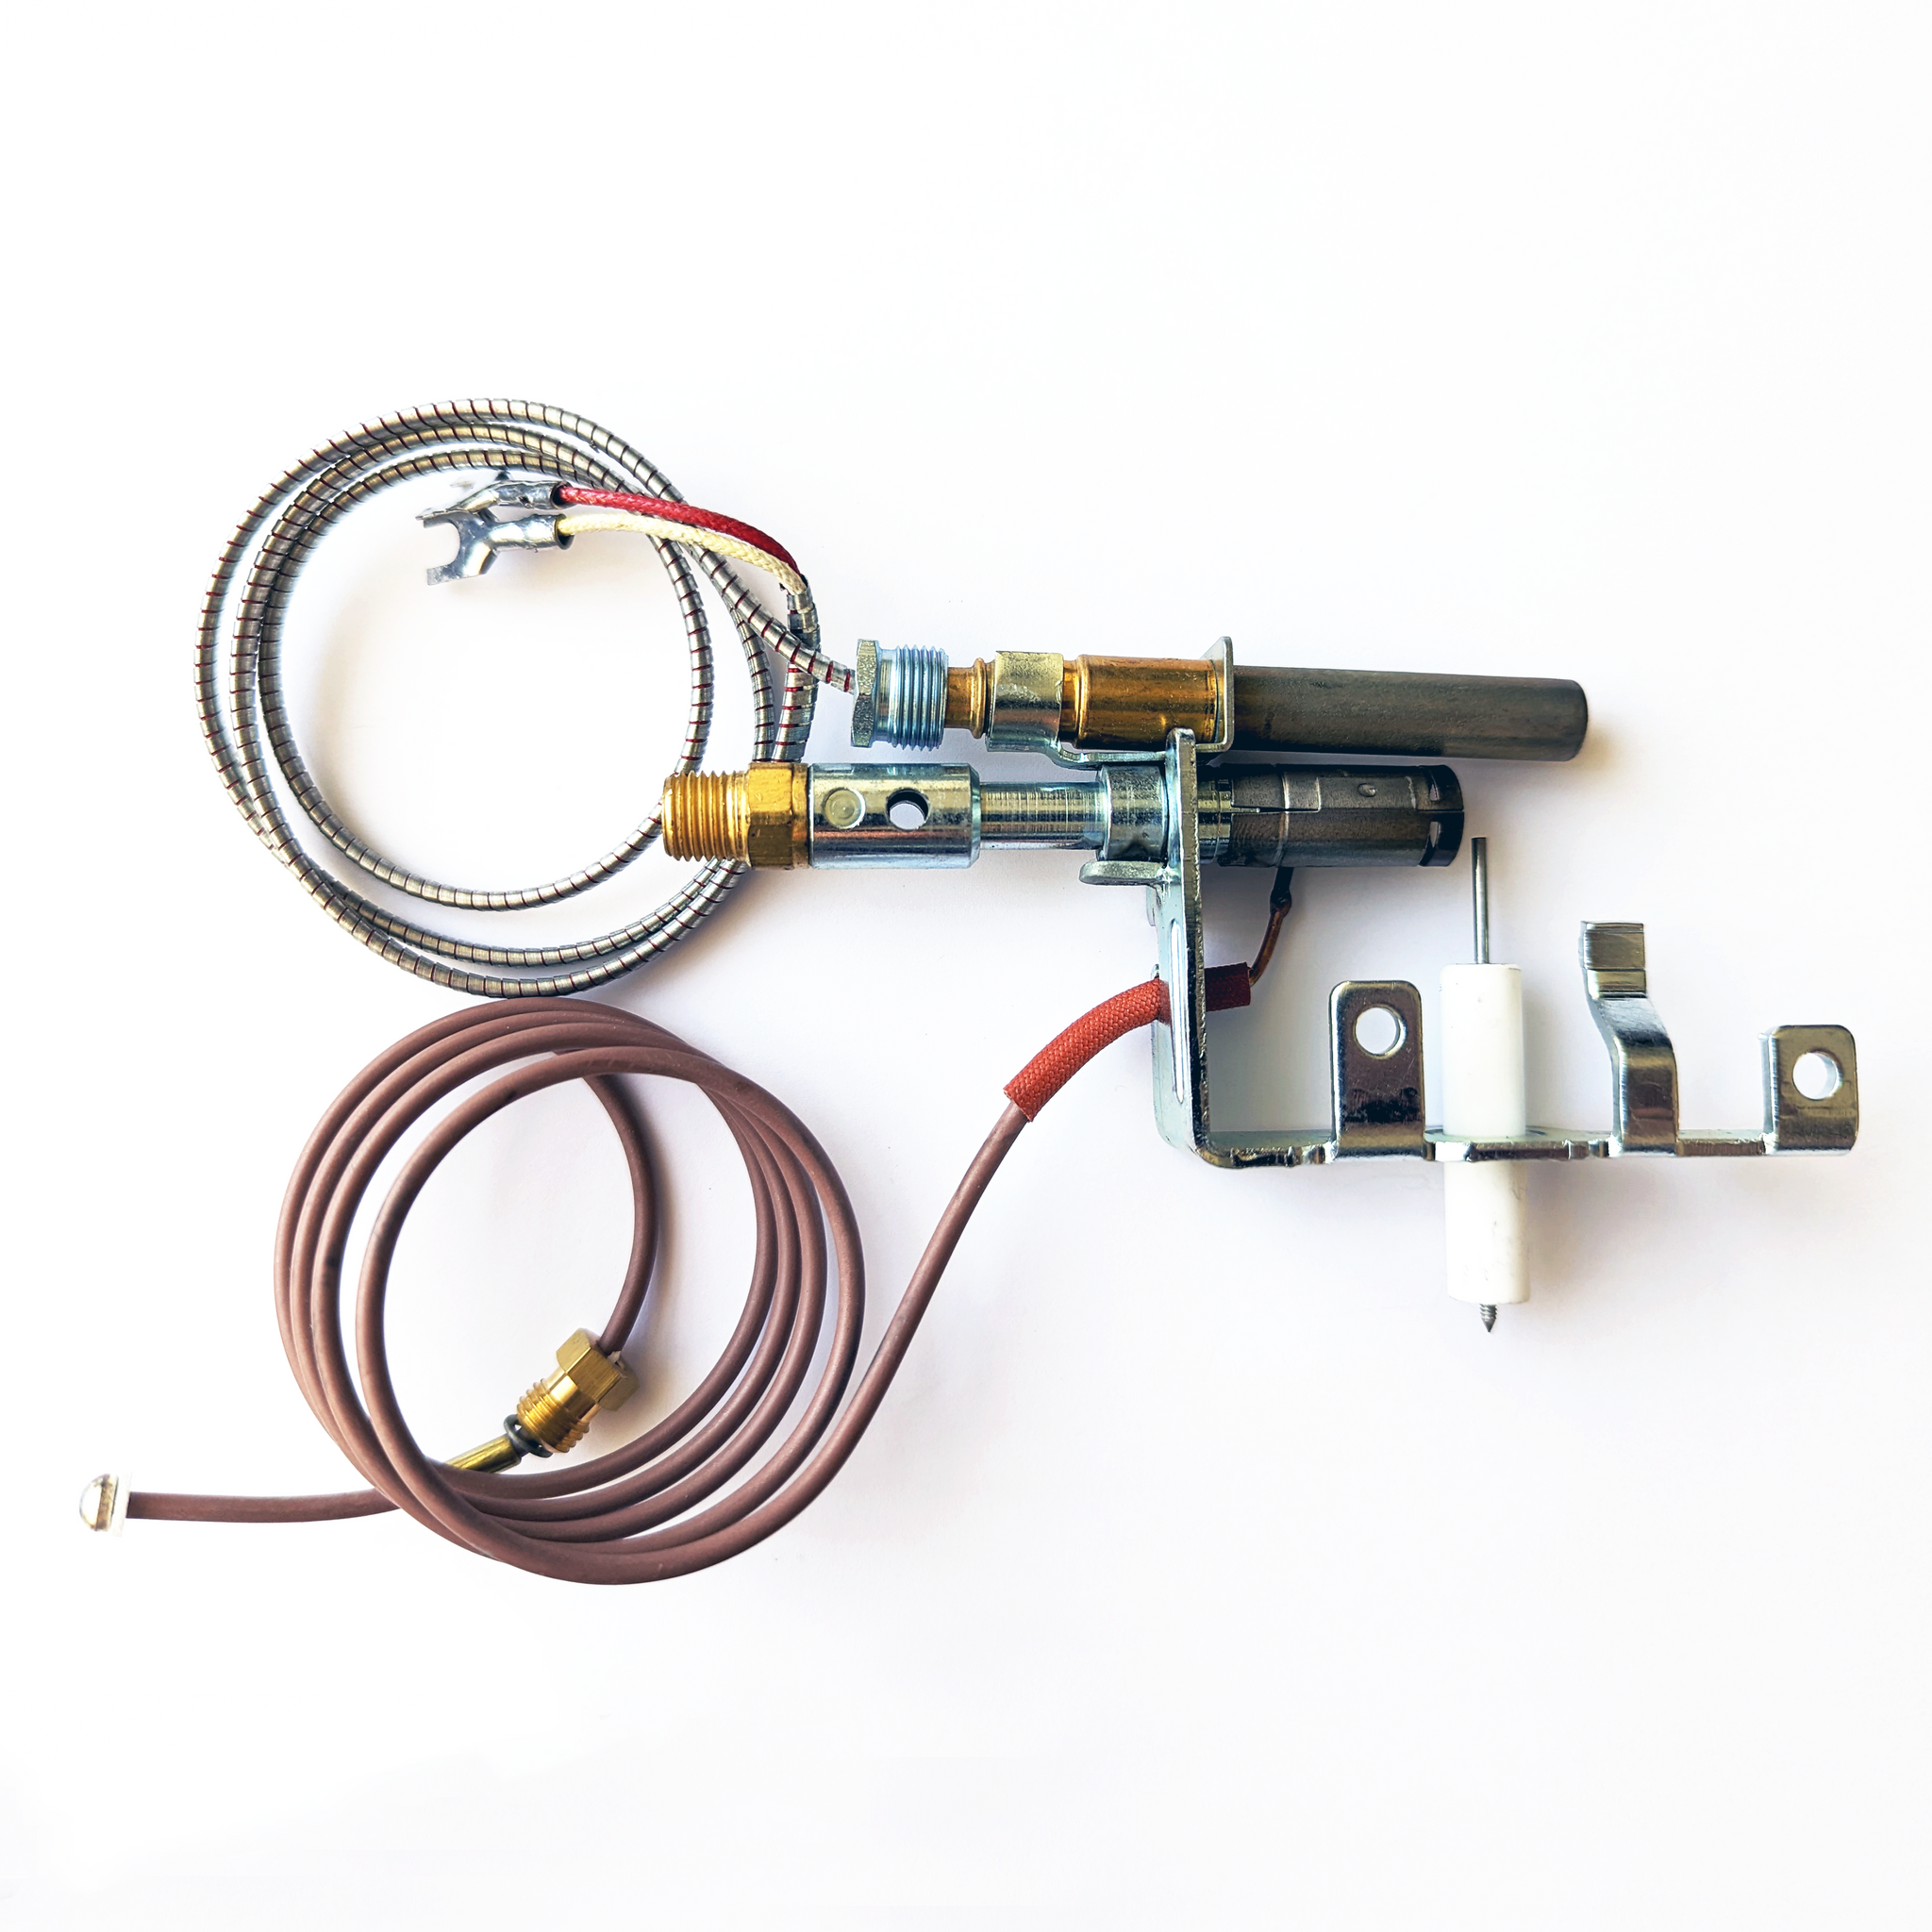 Gas valv e • Pilot burner • T hermocouple • Heating accessories gas